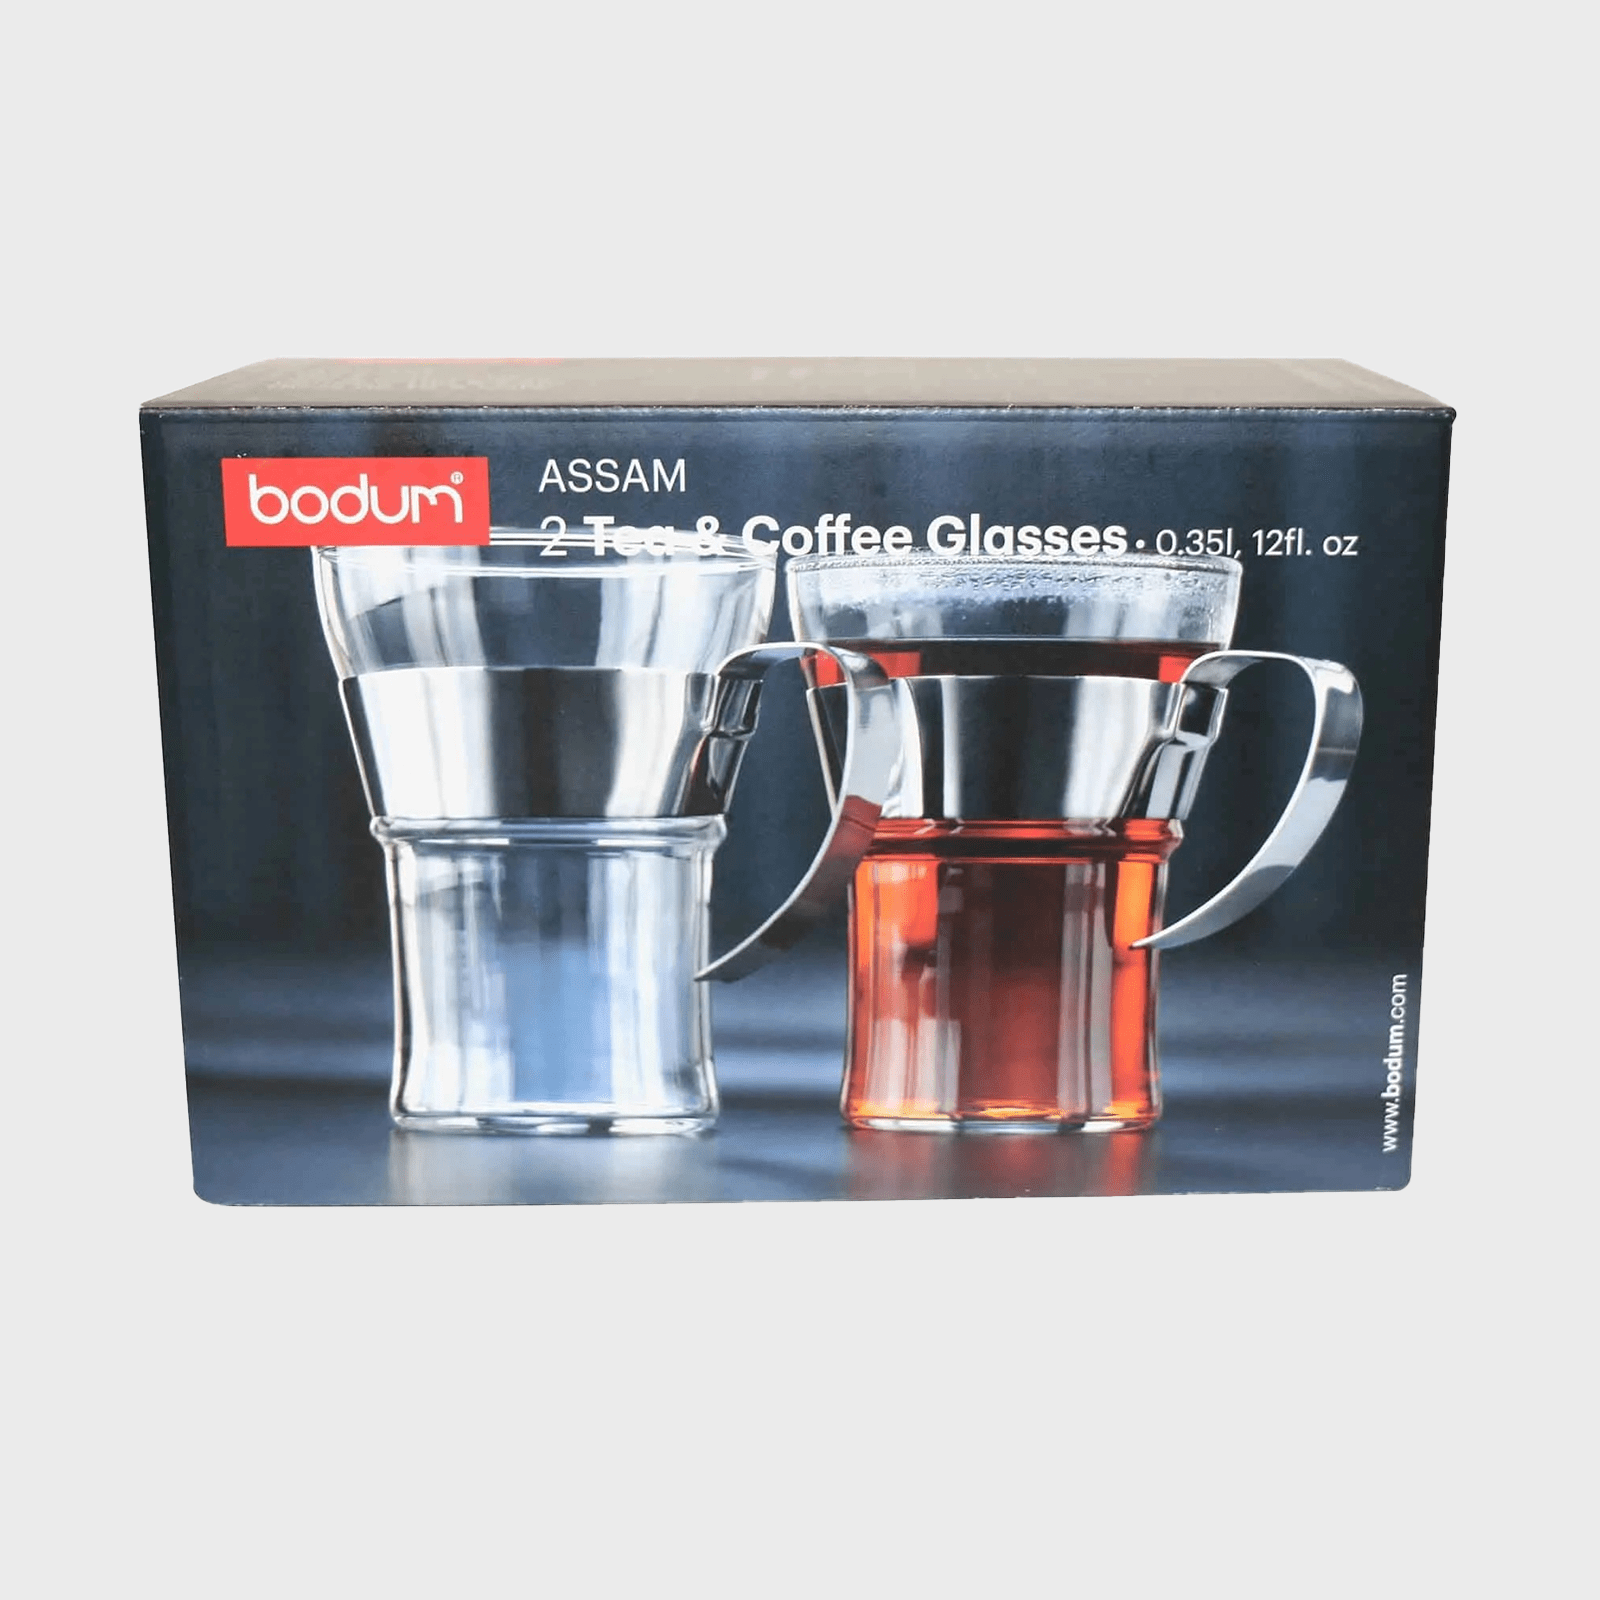 Bodum Assam 2 Tea Coffee Glasses Stainless Steel Handle Ecomm Via Coffeebean